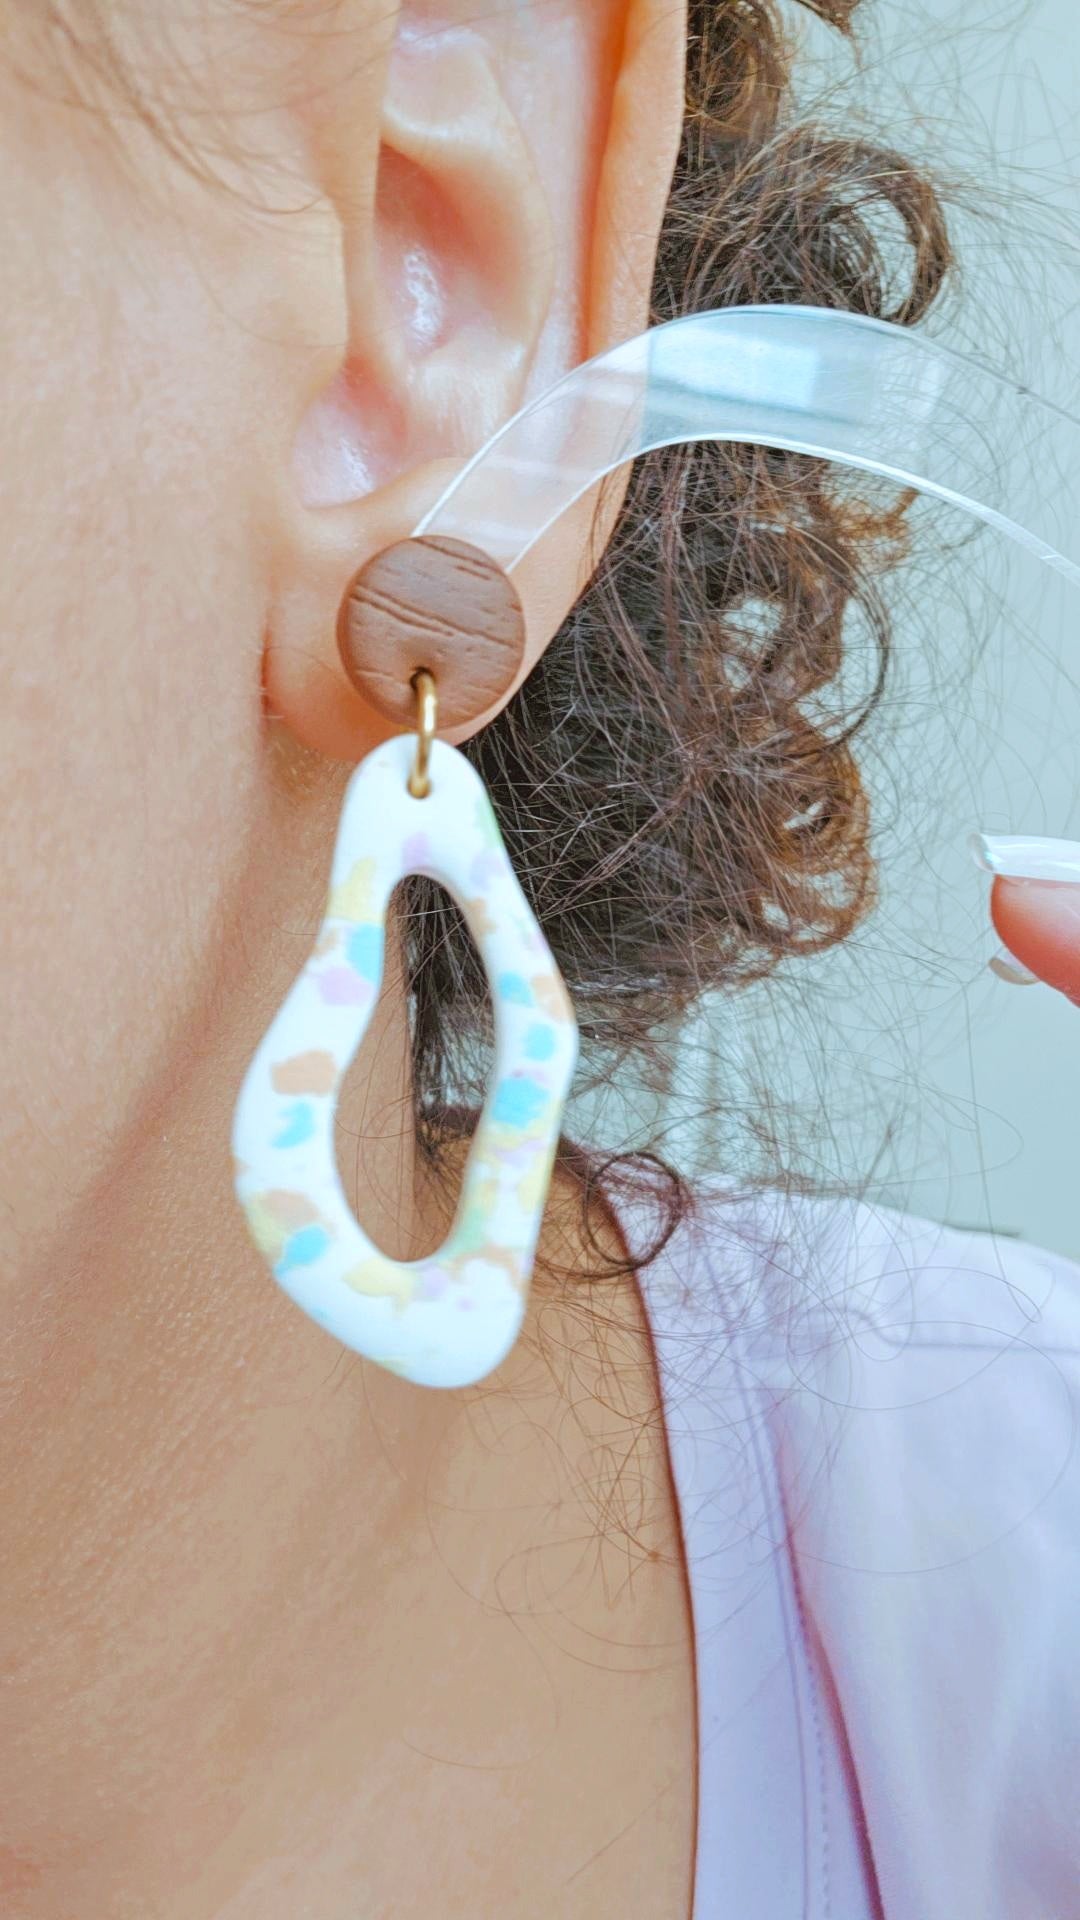 Organic shaped earrings